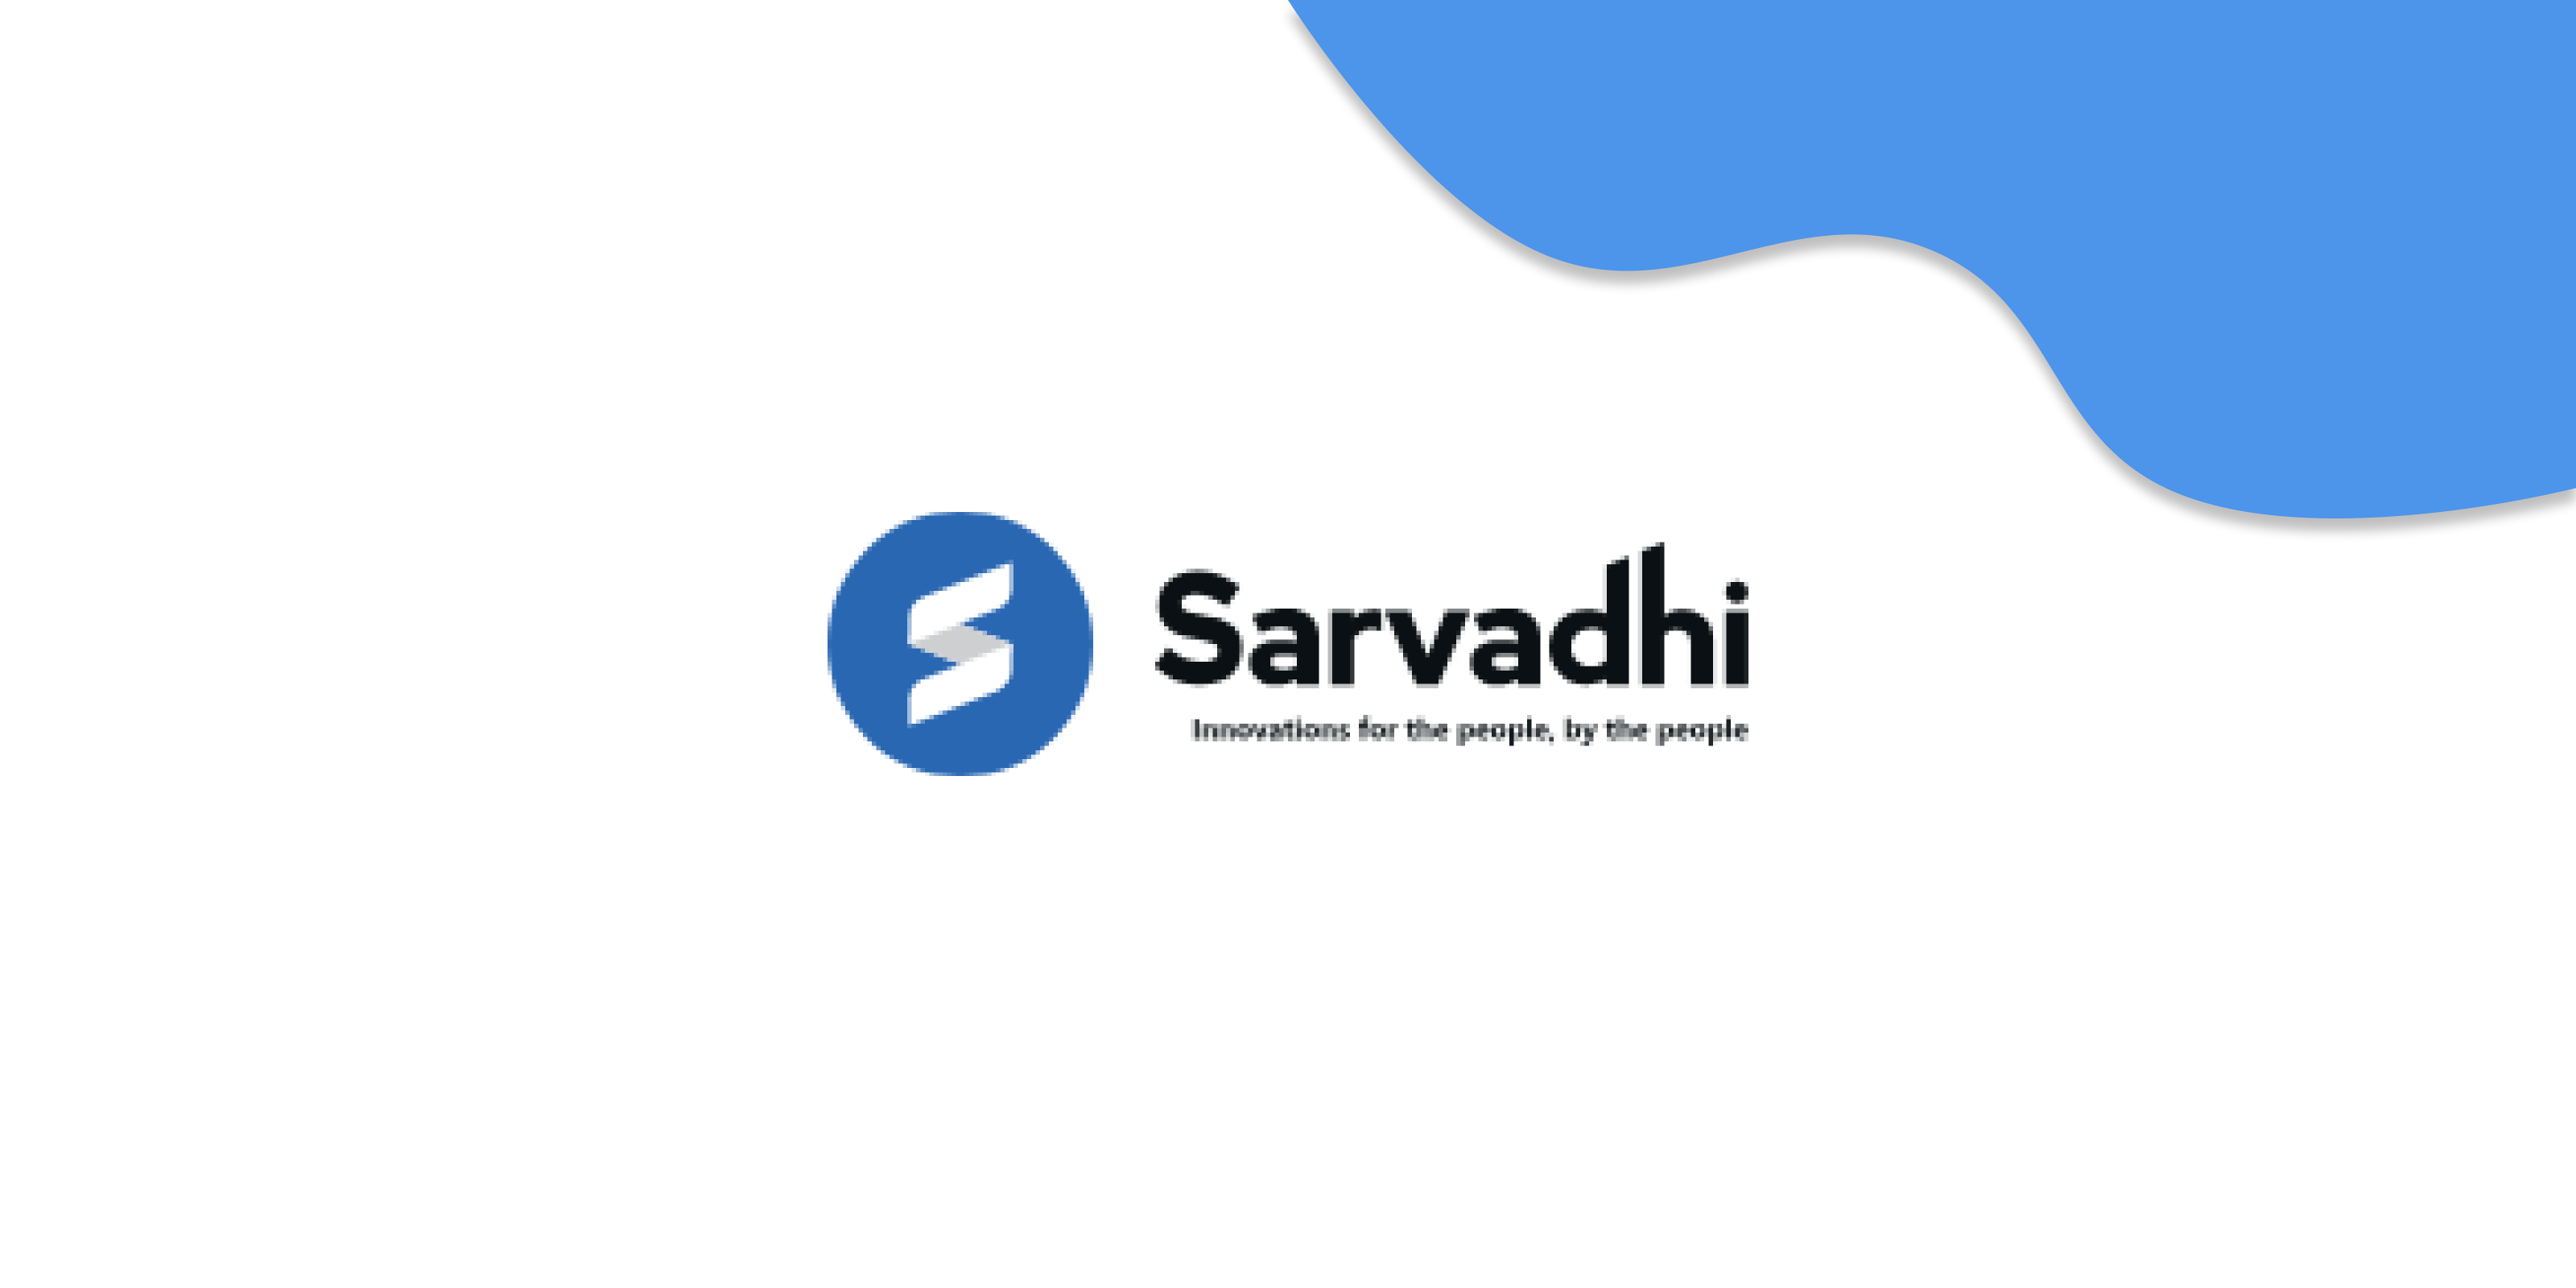 sarvadhi pvt ltd logo image for lisitng top companies india